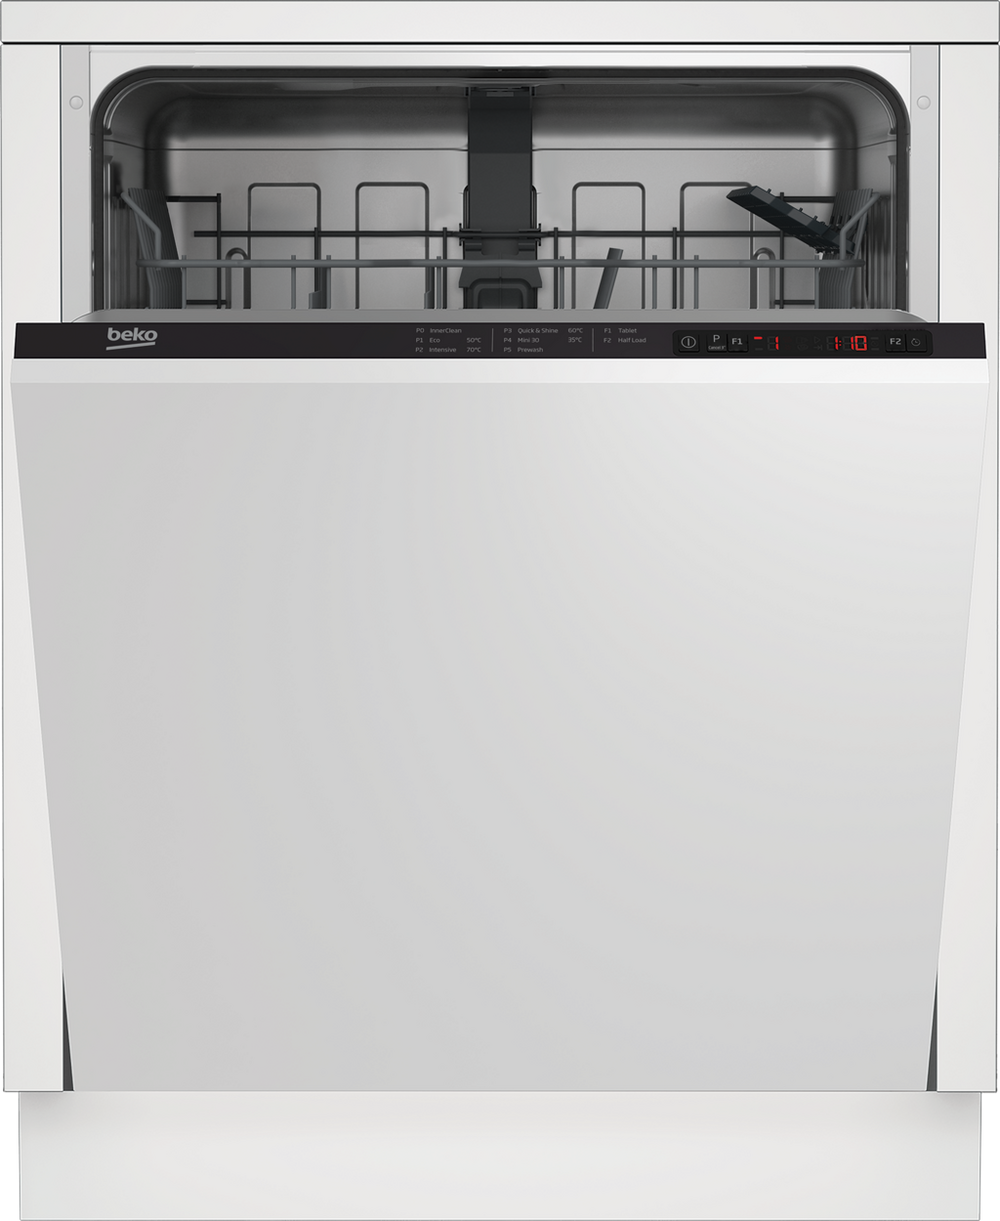 Beko DIN15322 Integrated Full Size Dishwasher - White - 13 Place Settings